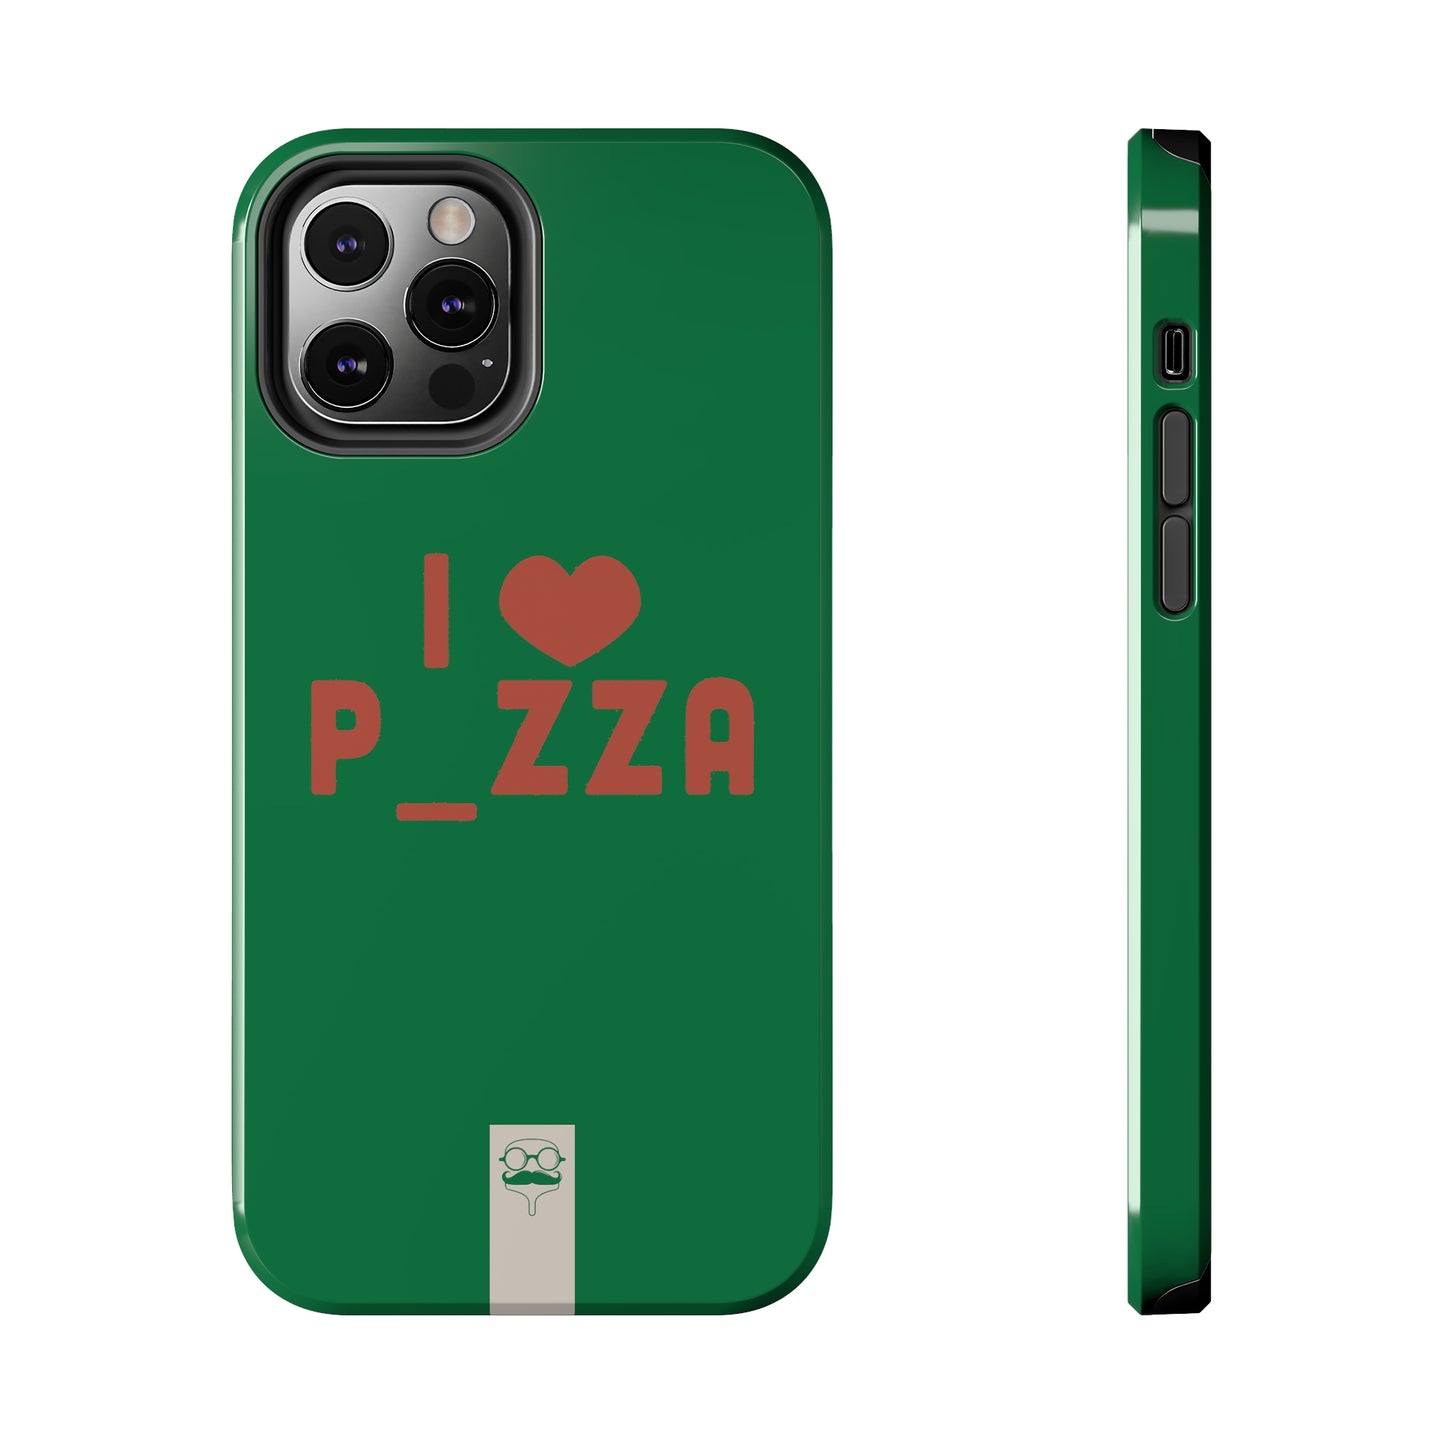 I Love P_ZZA - Tough iPhone Cases